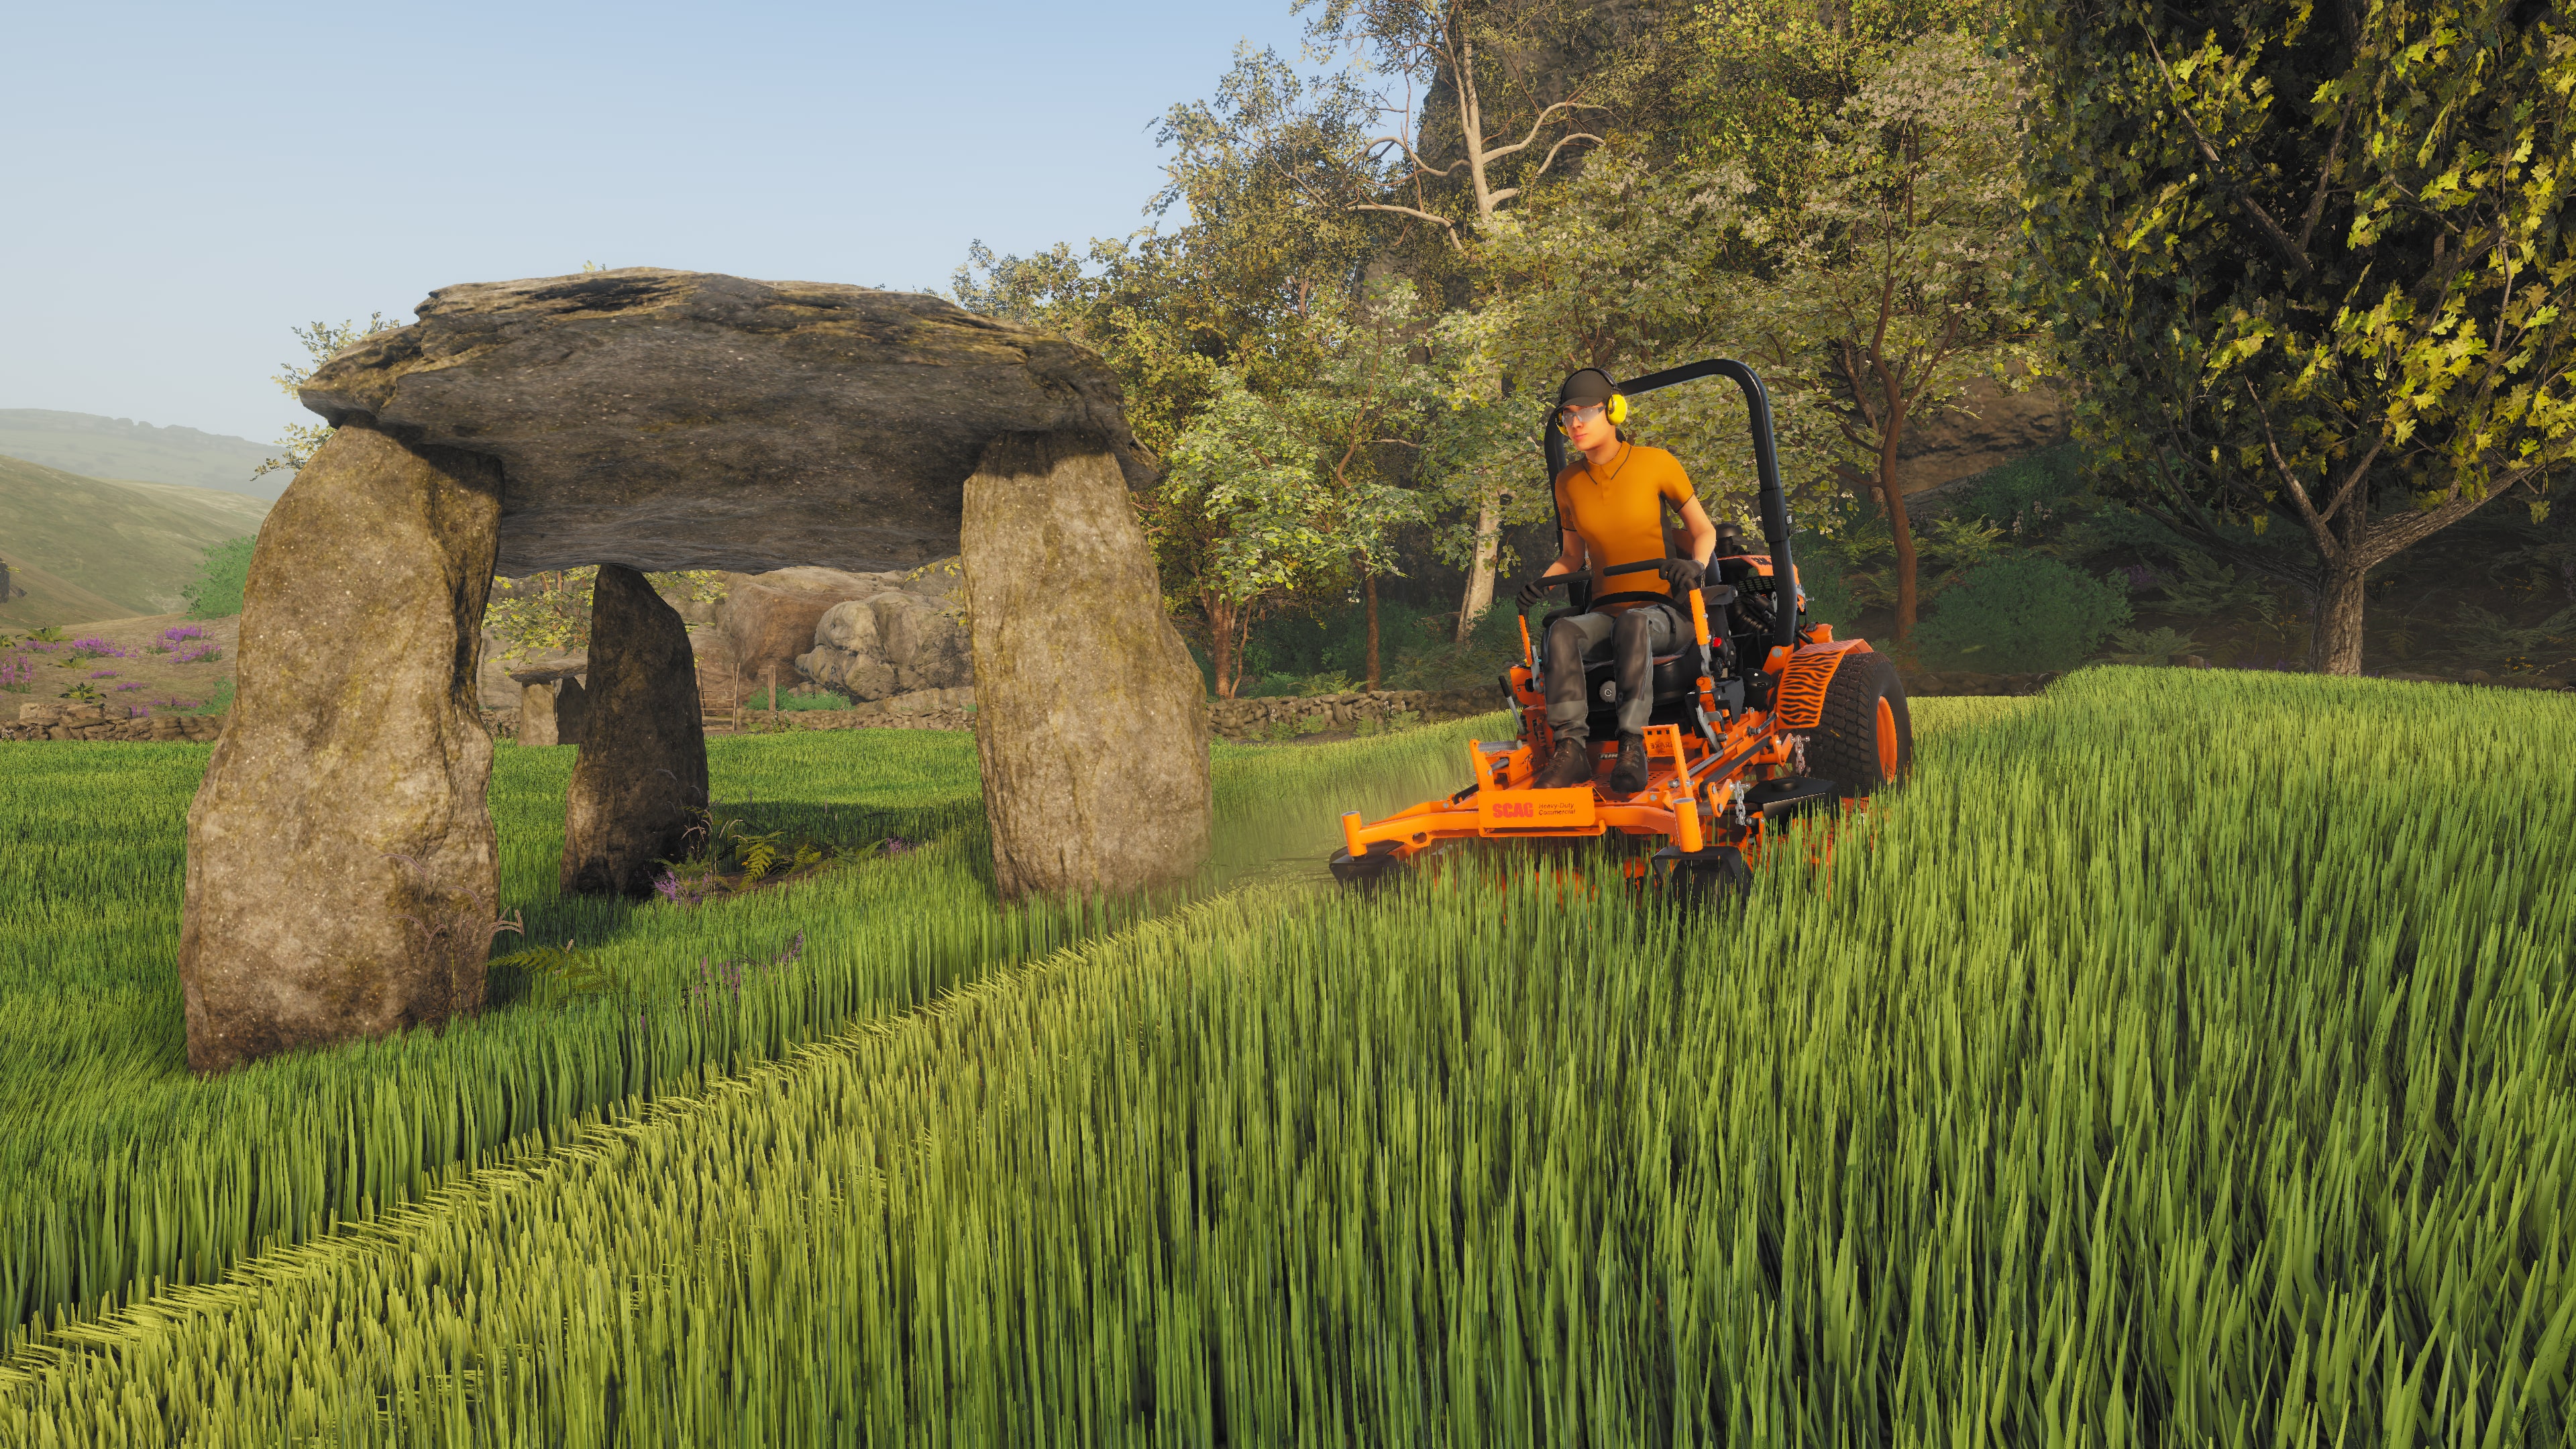 Mowing Lawn Edition Simulator: Landmark